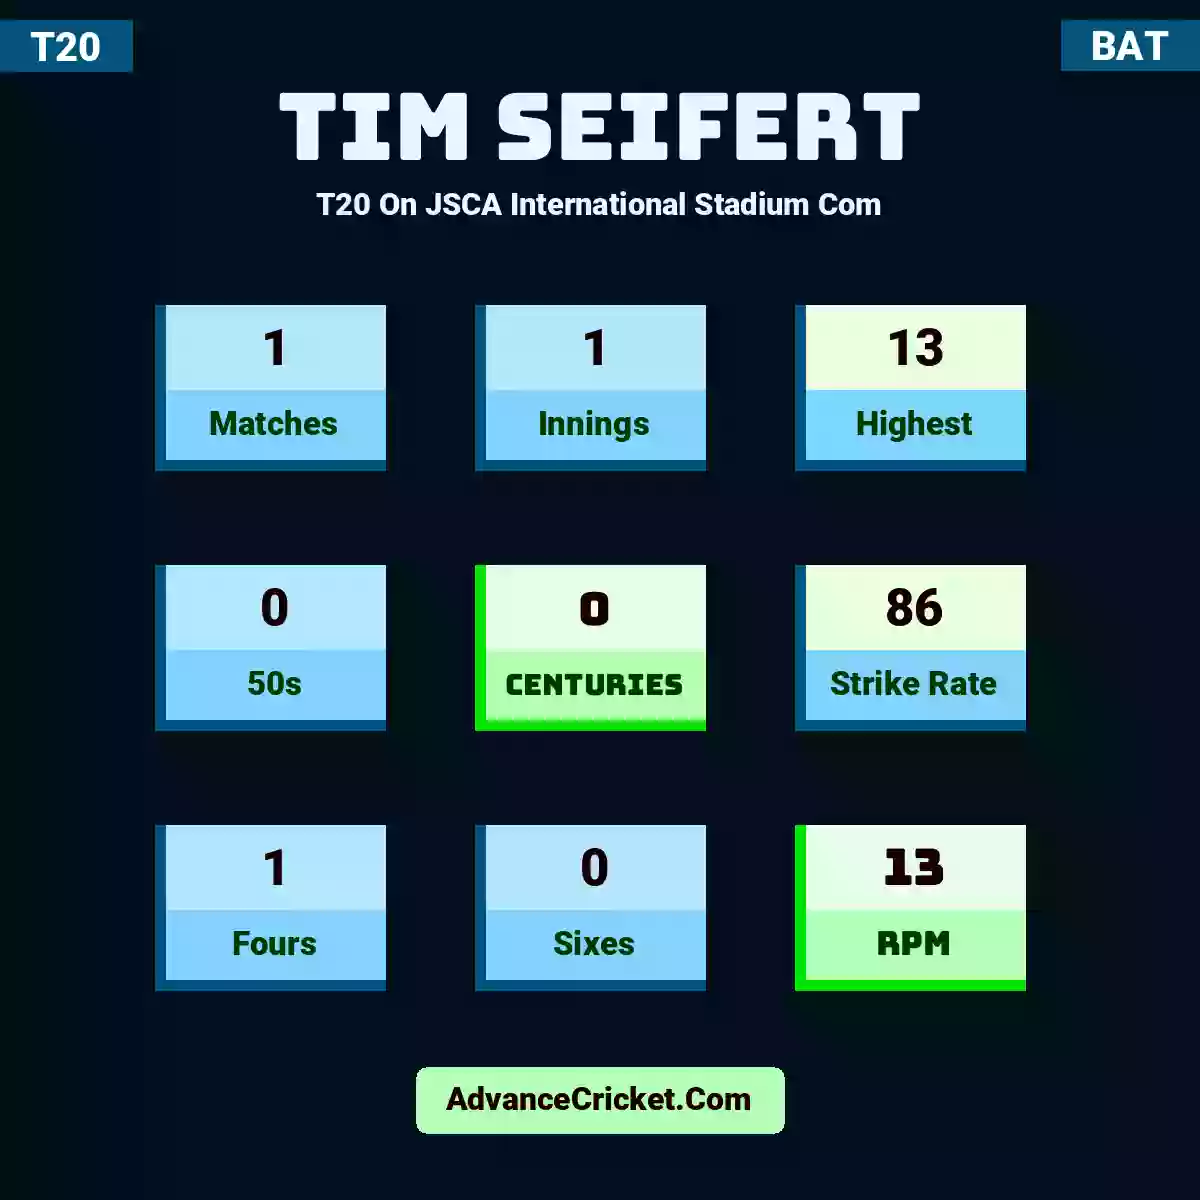 Tim Seifert T20  On JSCA International Stadium Com, Tim Seifert played 1 matches, scored 13 runs as highest, 0 half-centuries, and 0 centuries, with a strike rate of 86. T.Seifert hit 1 fours and 0 sixes, with an RPM of 13.